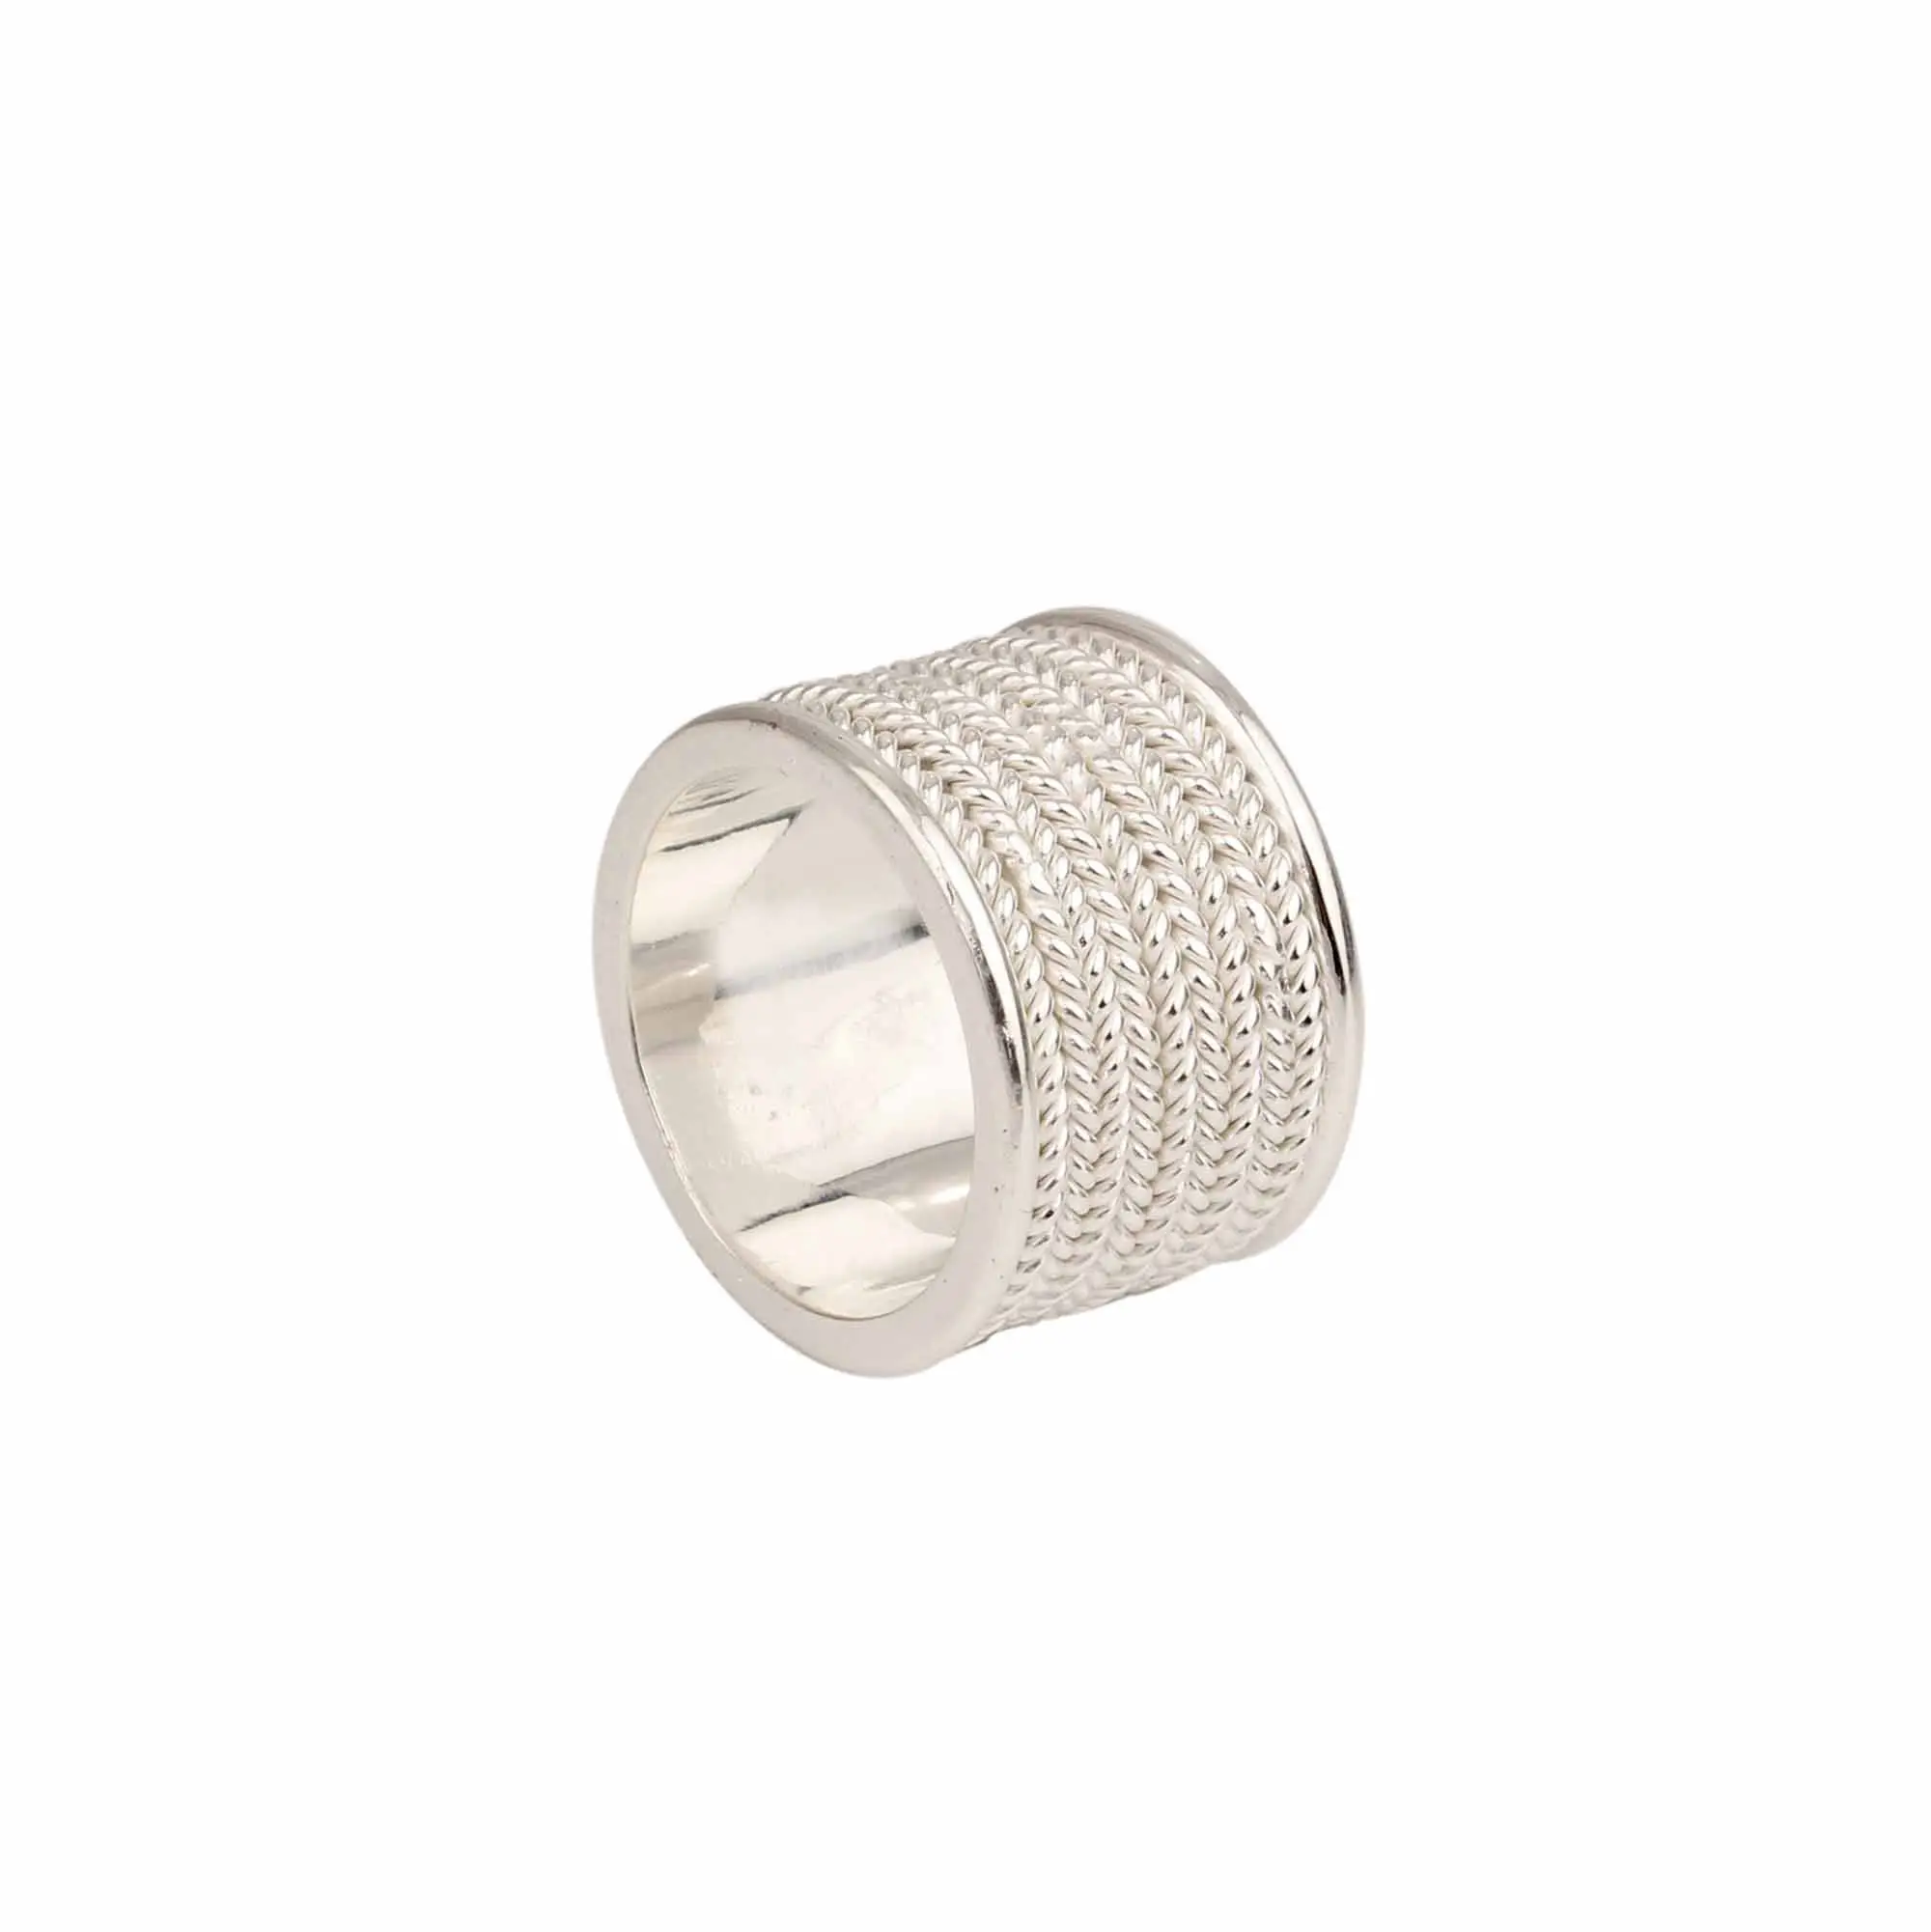 Personalized Hammered Solid 925 Sterling Silver Designer Textured Meditation Spinner Handmade Ring Affordable Price Supplier